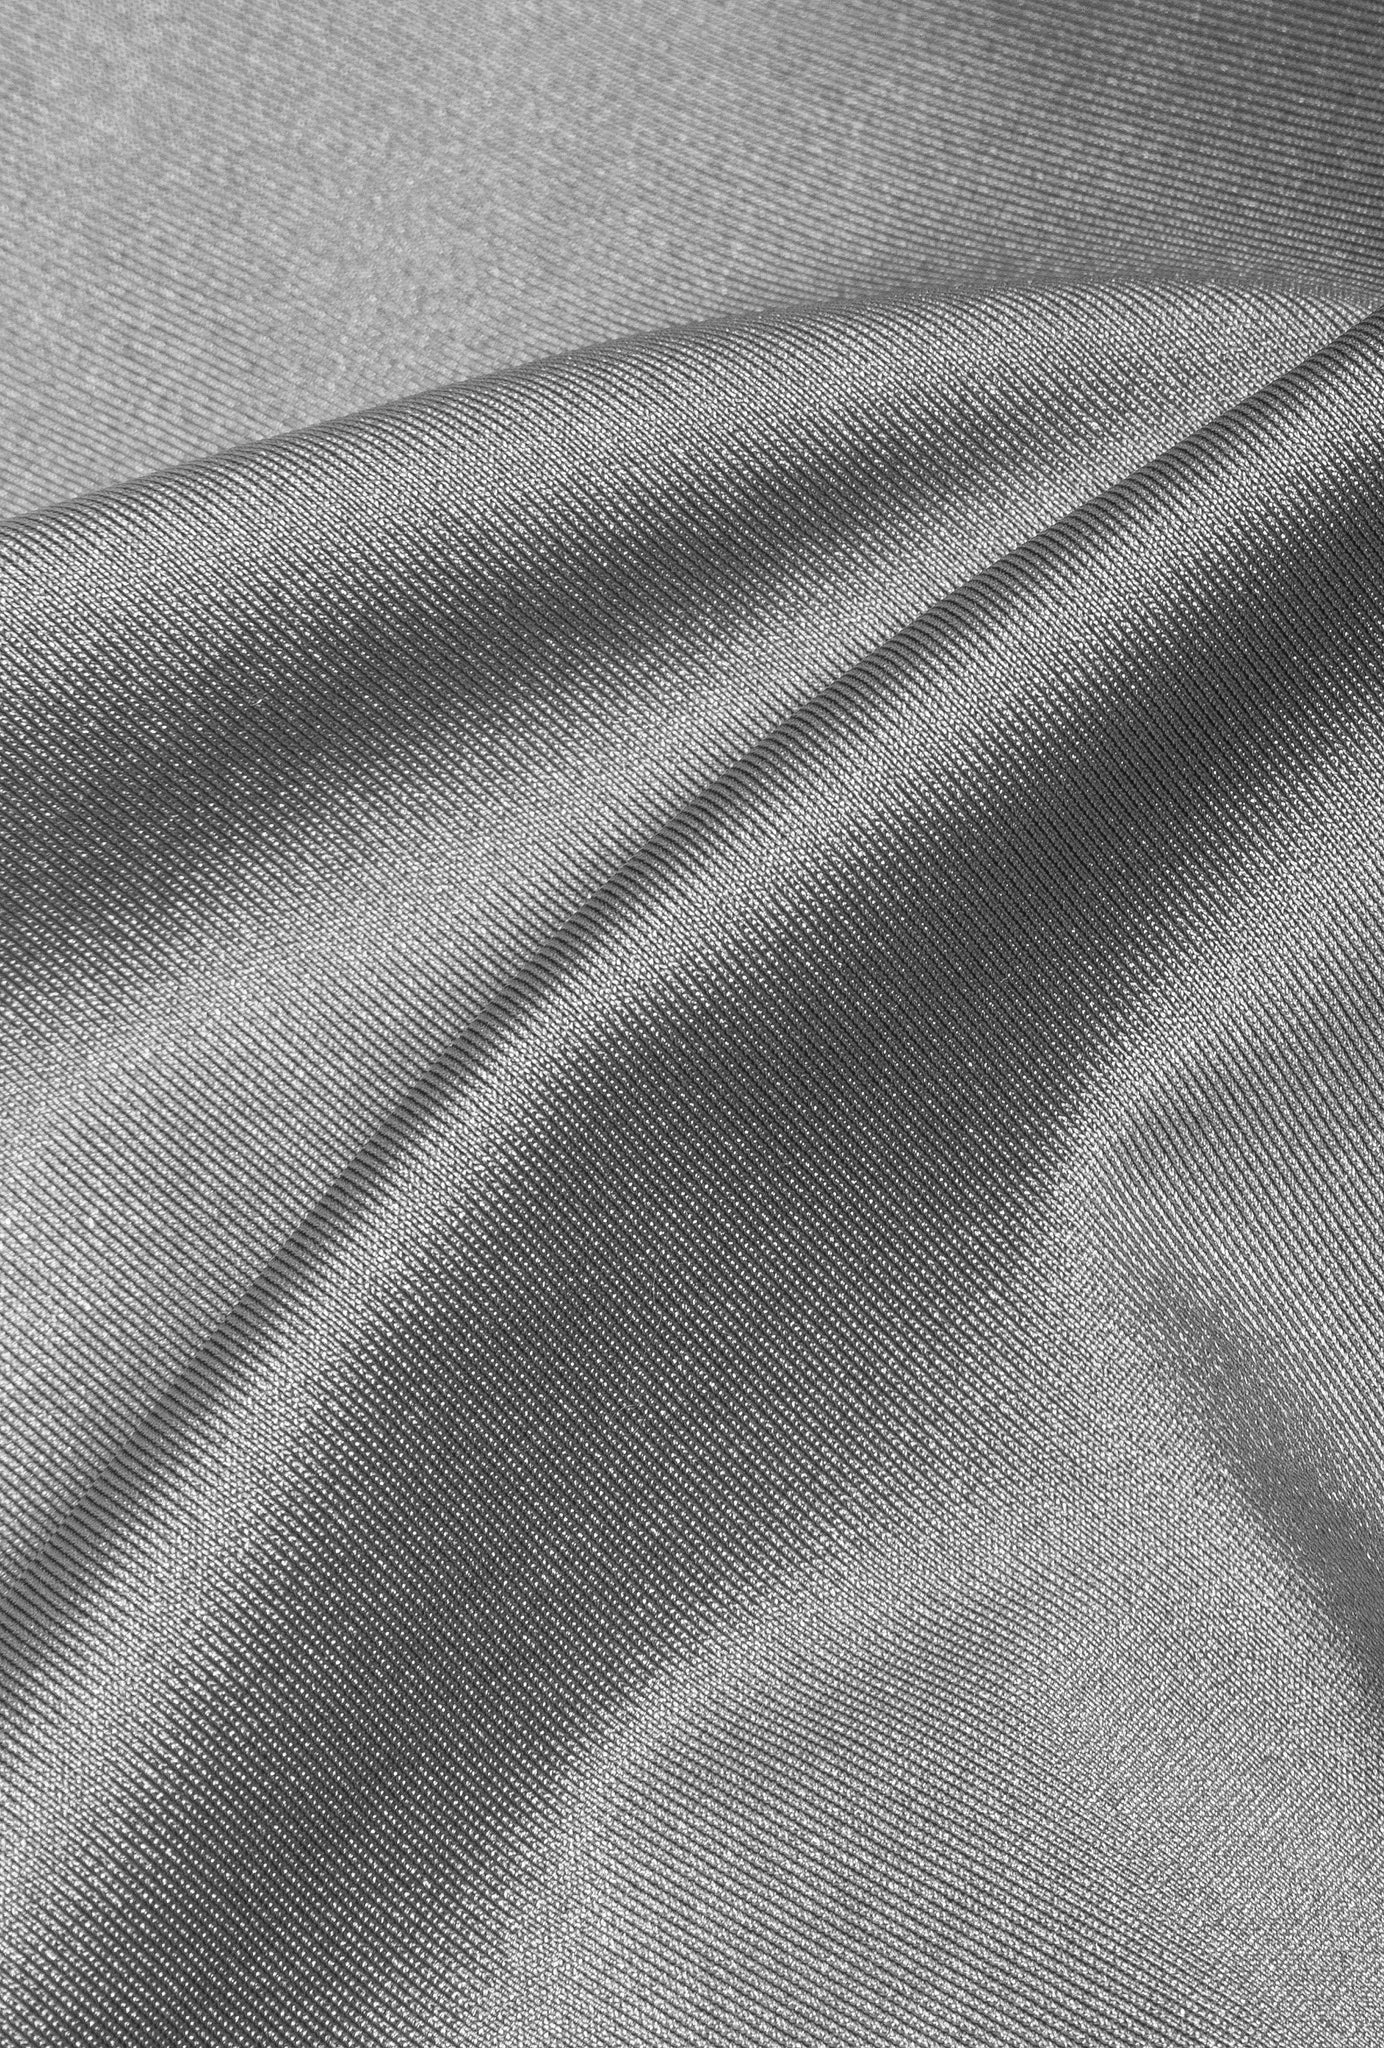 Olympus bodysuit stone grey